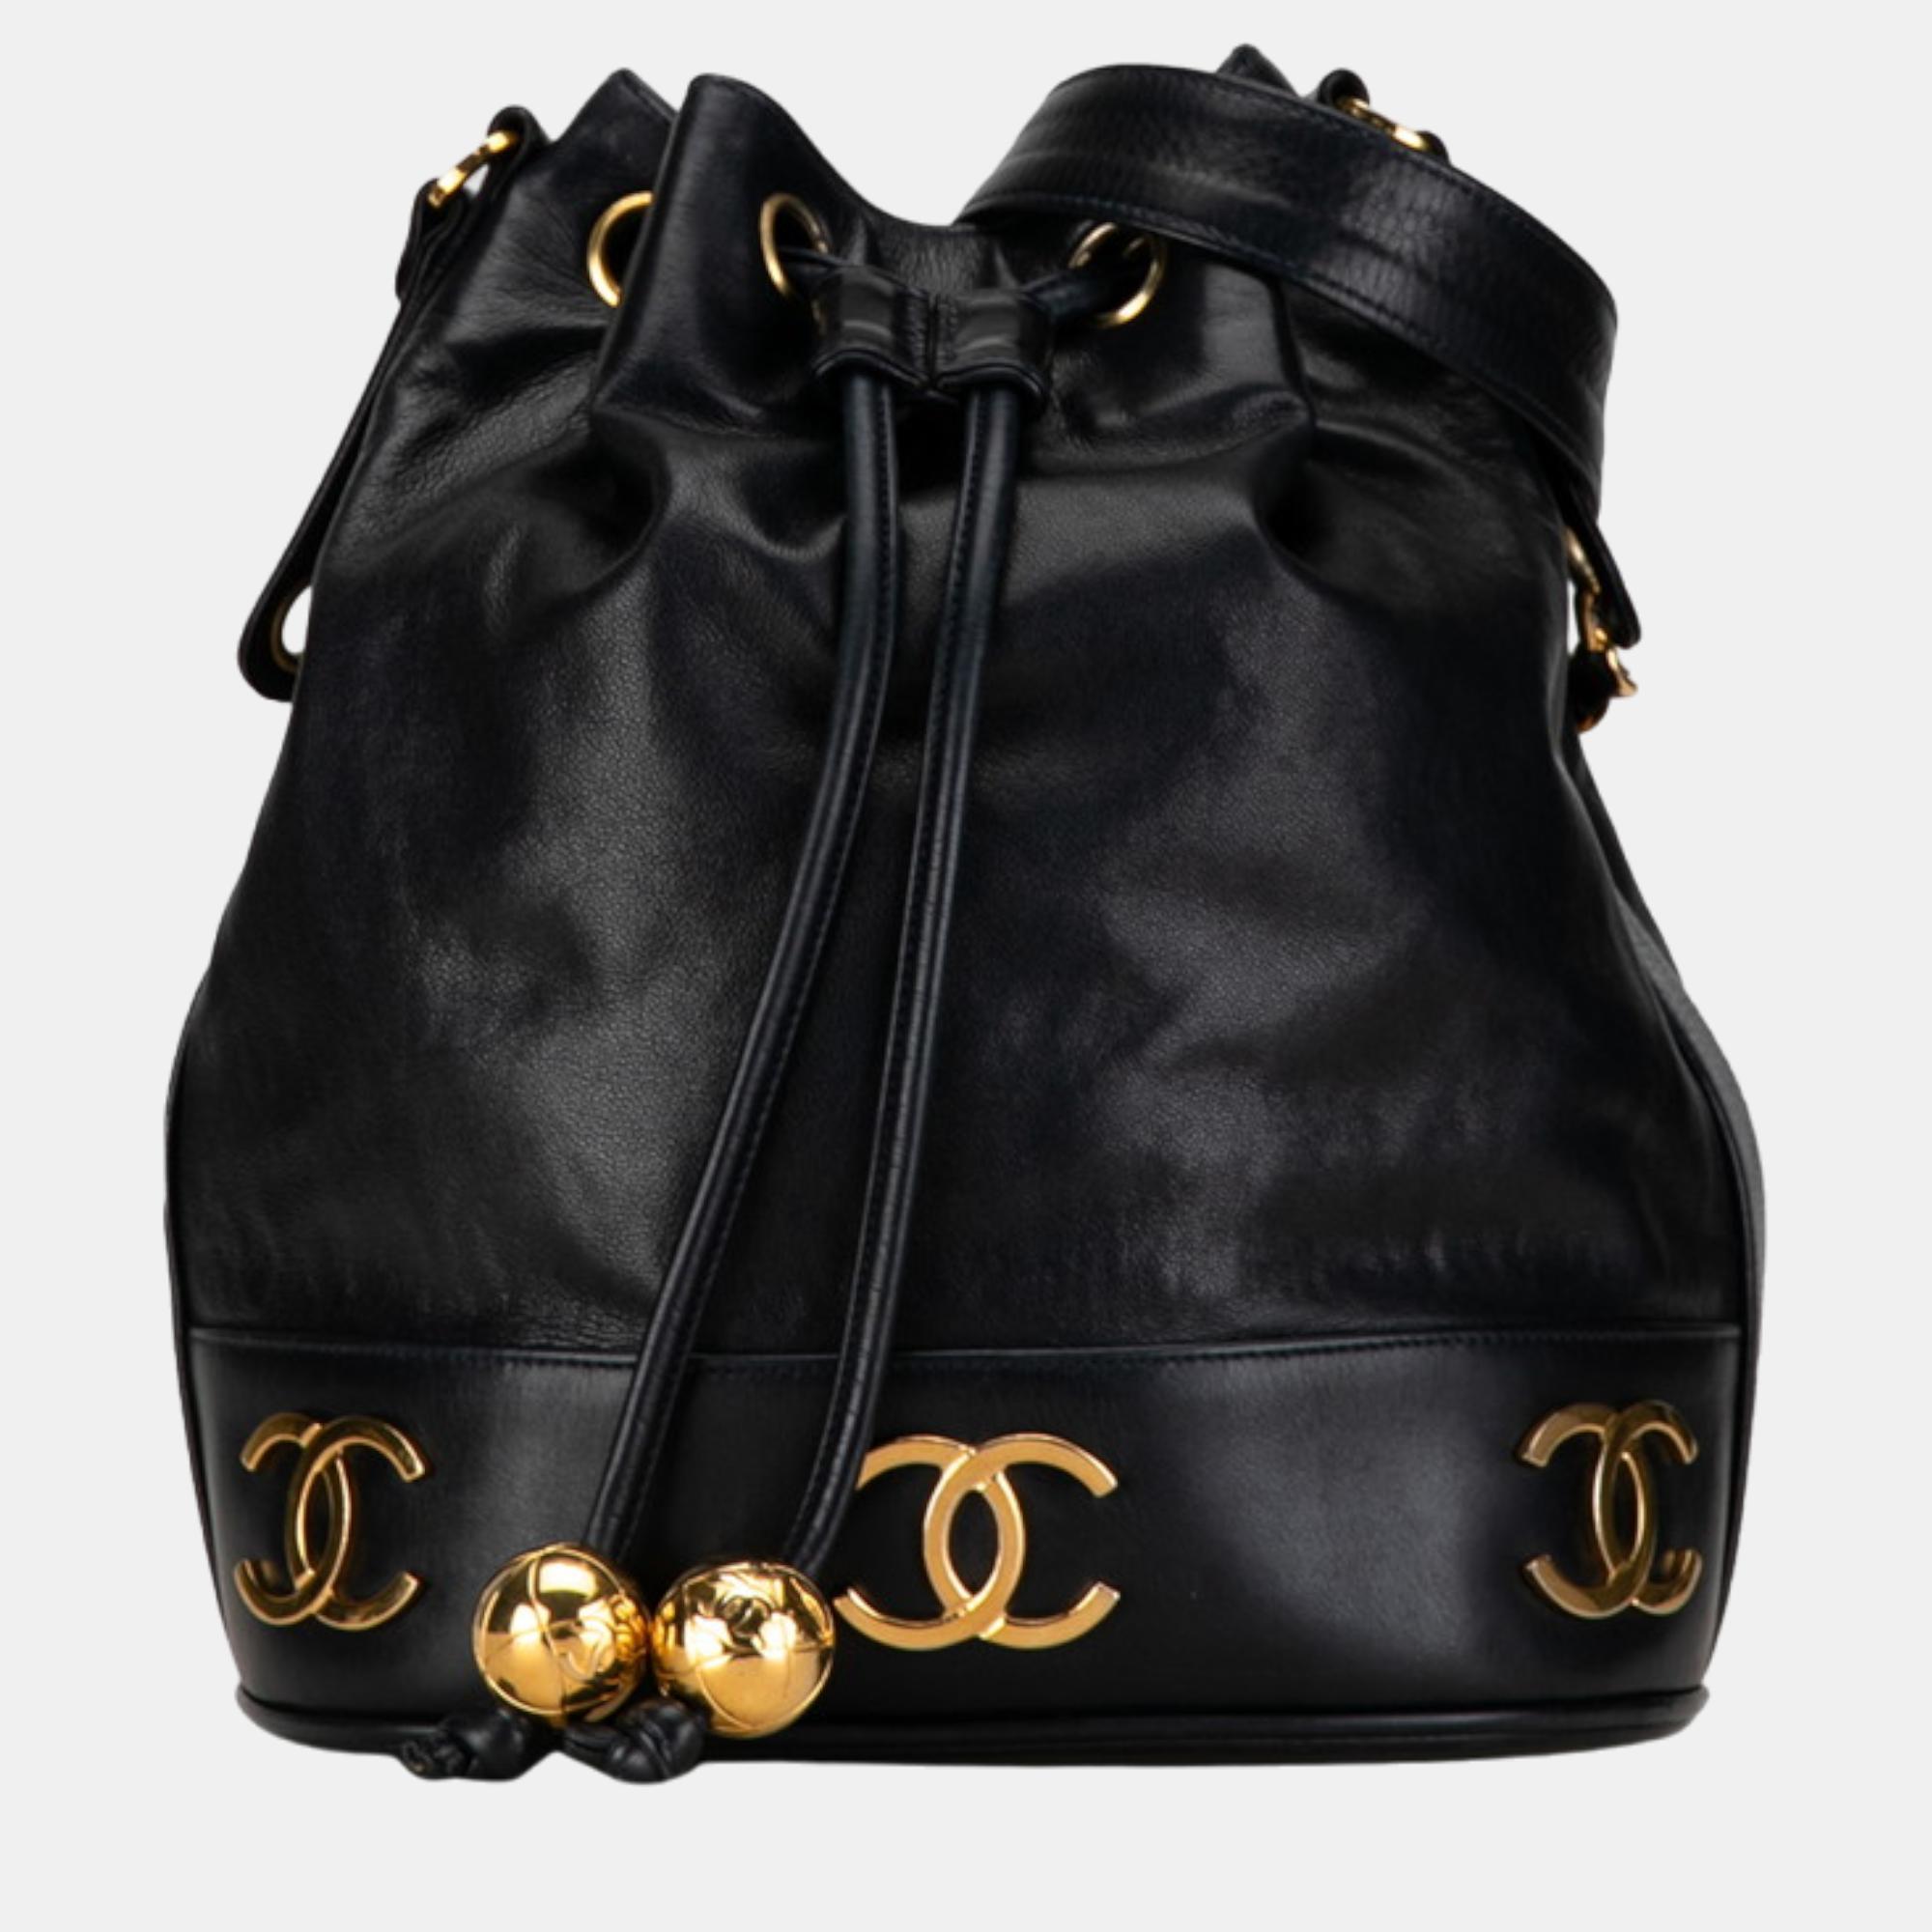 Chanel black leather triple cc drawstring bag